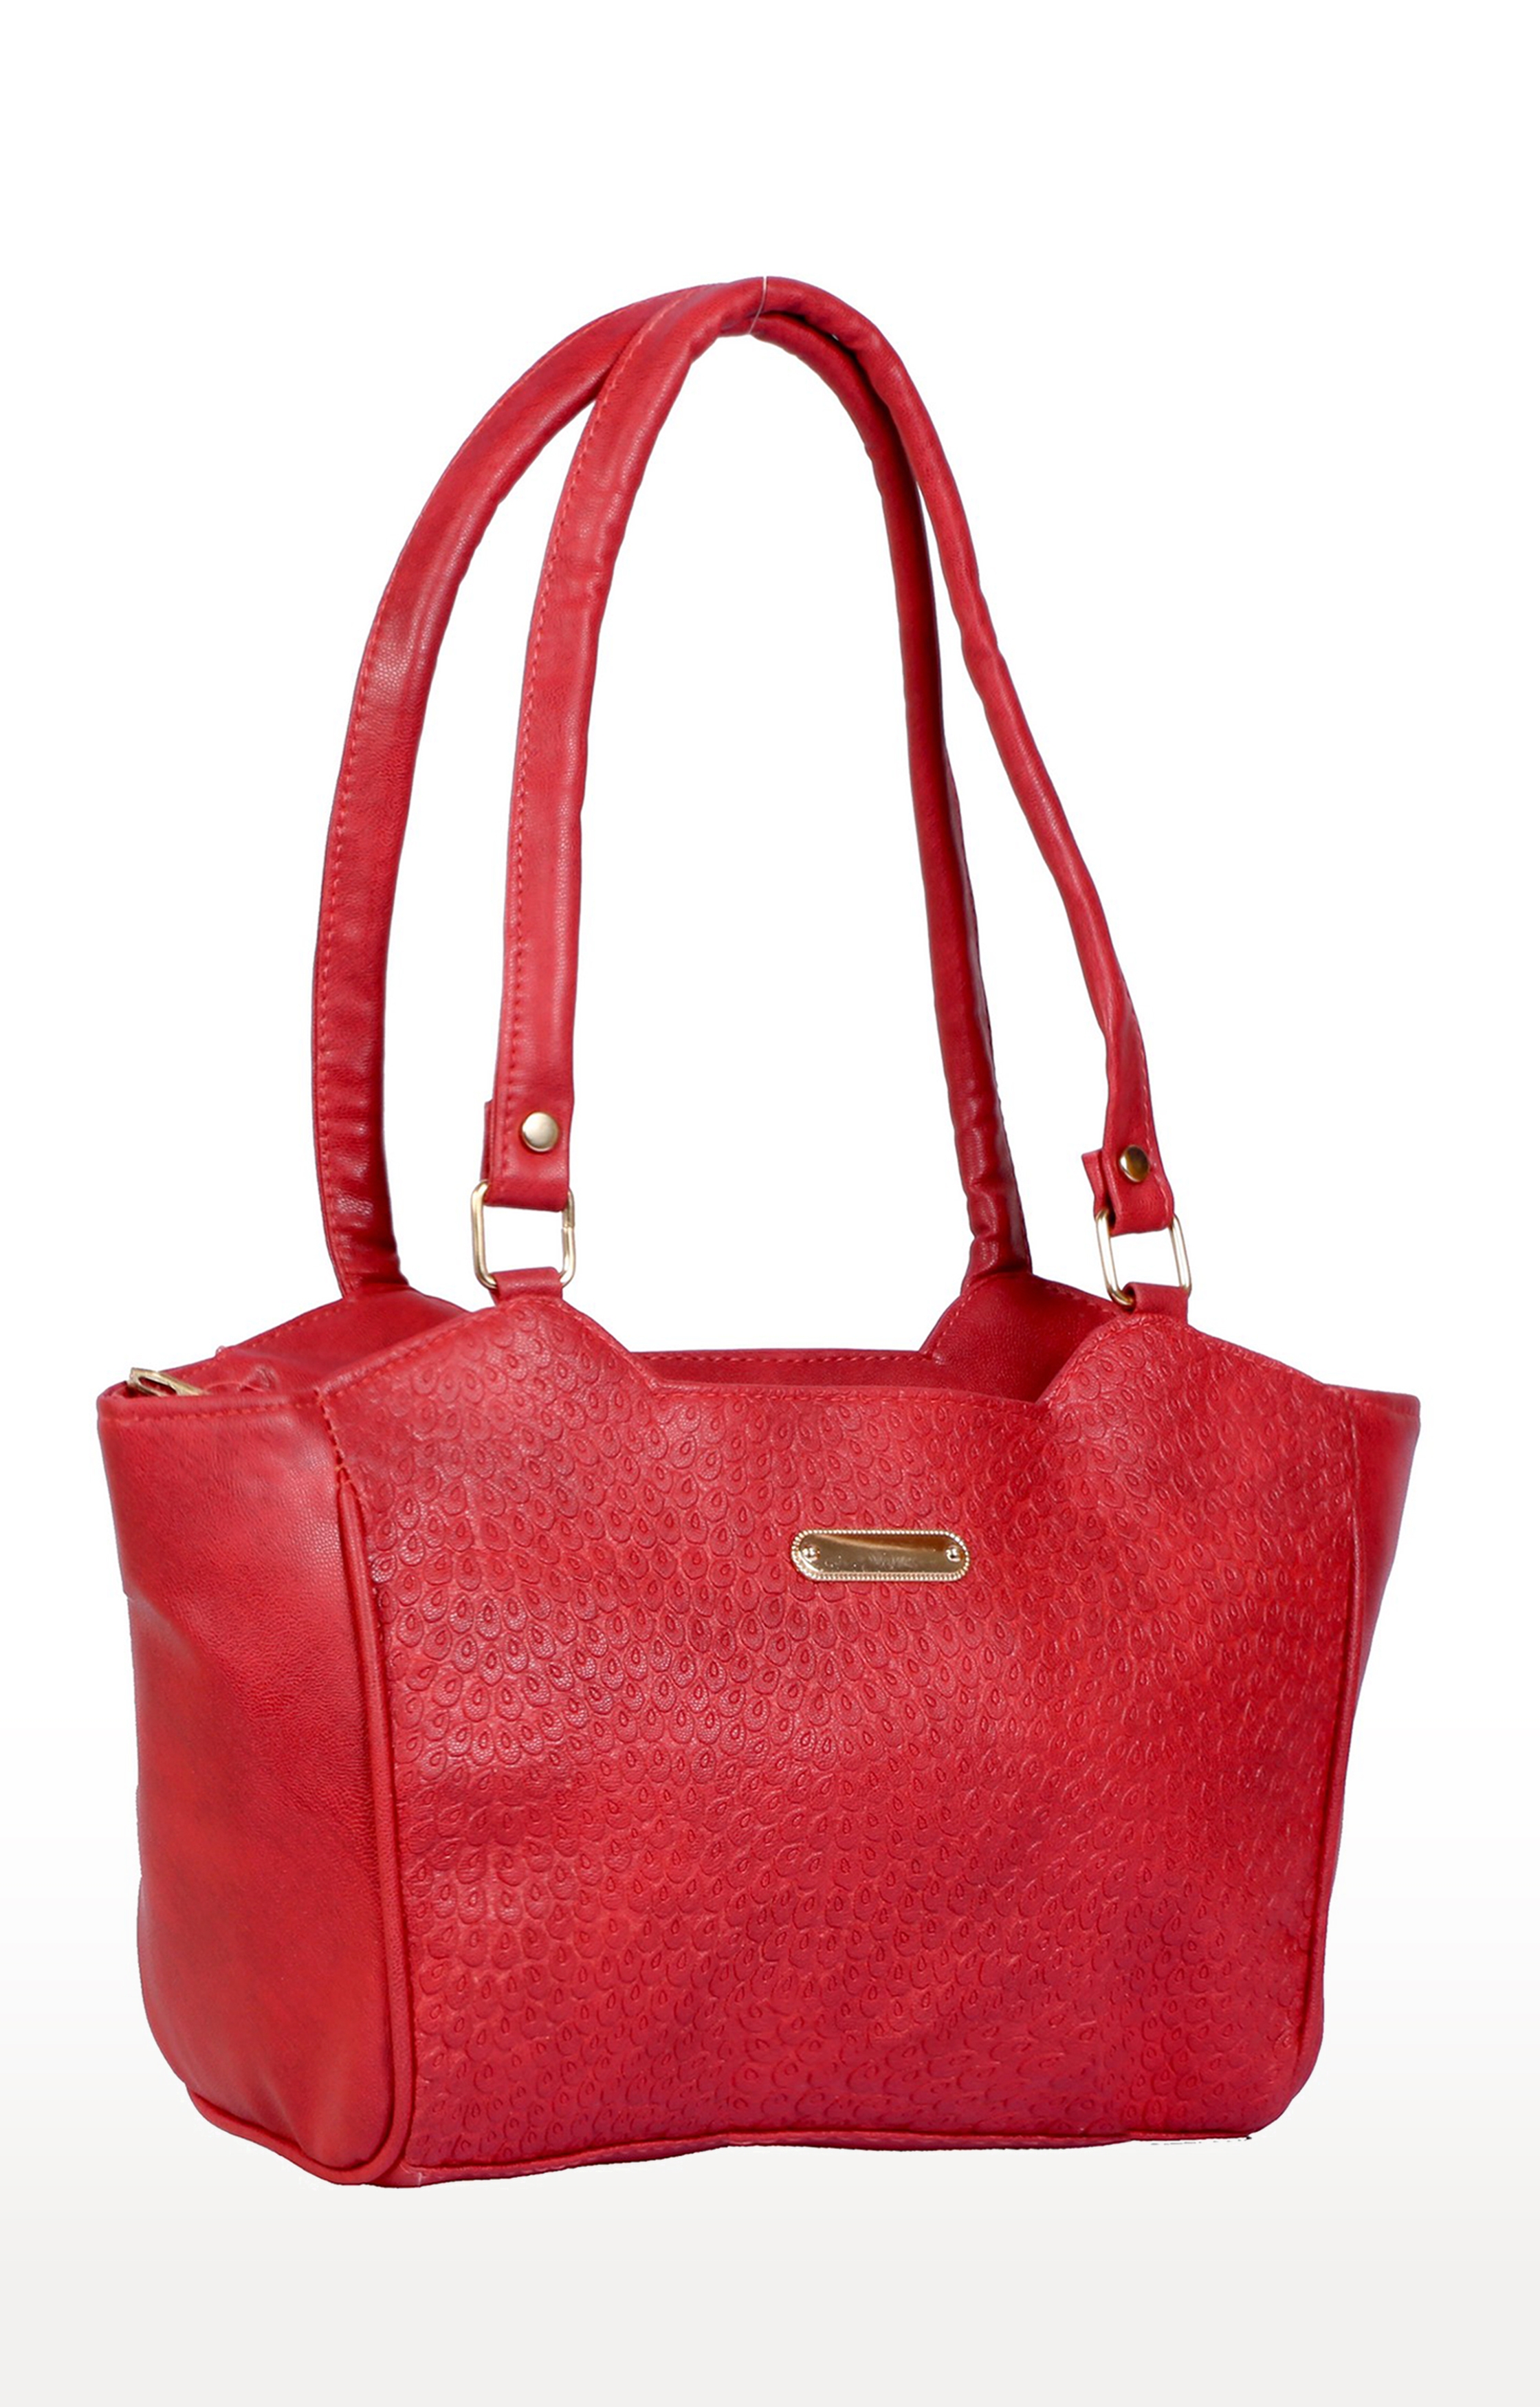 EMM | Lely's Beautiful Women's Handbag With Latest Shades -Pink 2